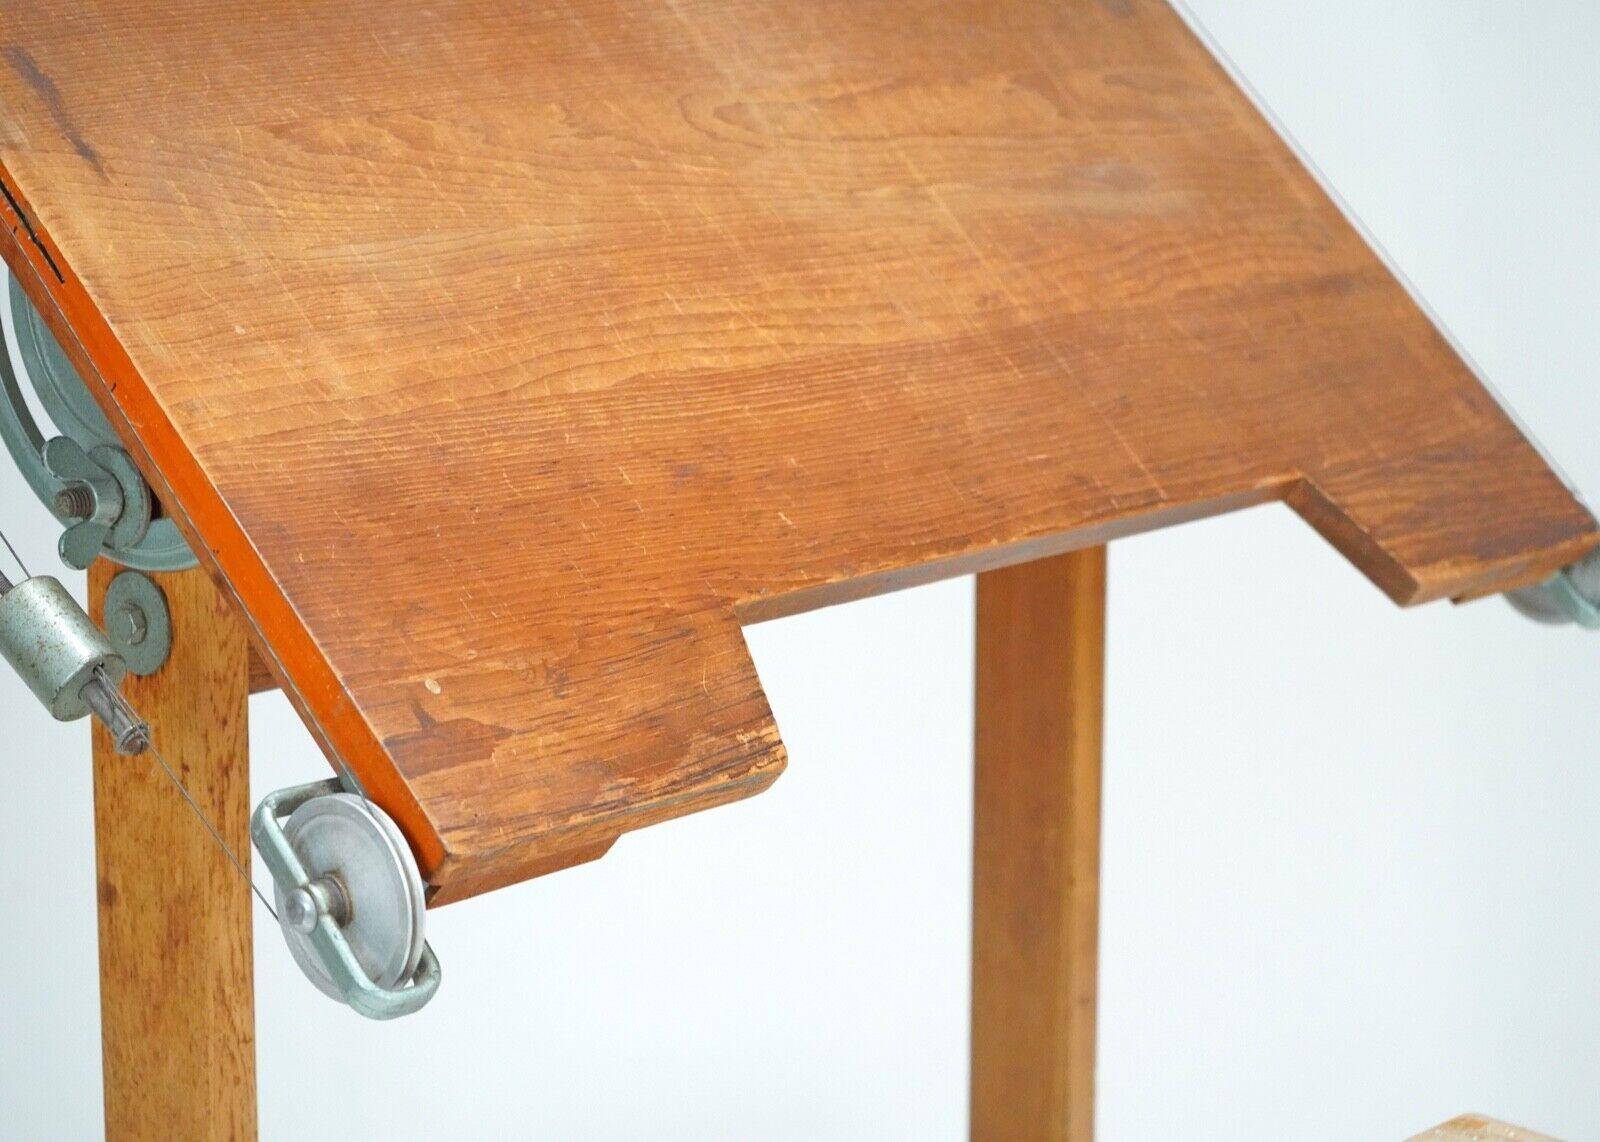 British 1940's Architect's Drafting Table - Midcentury Wooden & Iron Metal Base